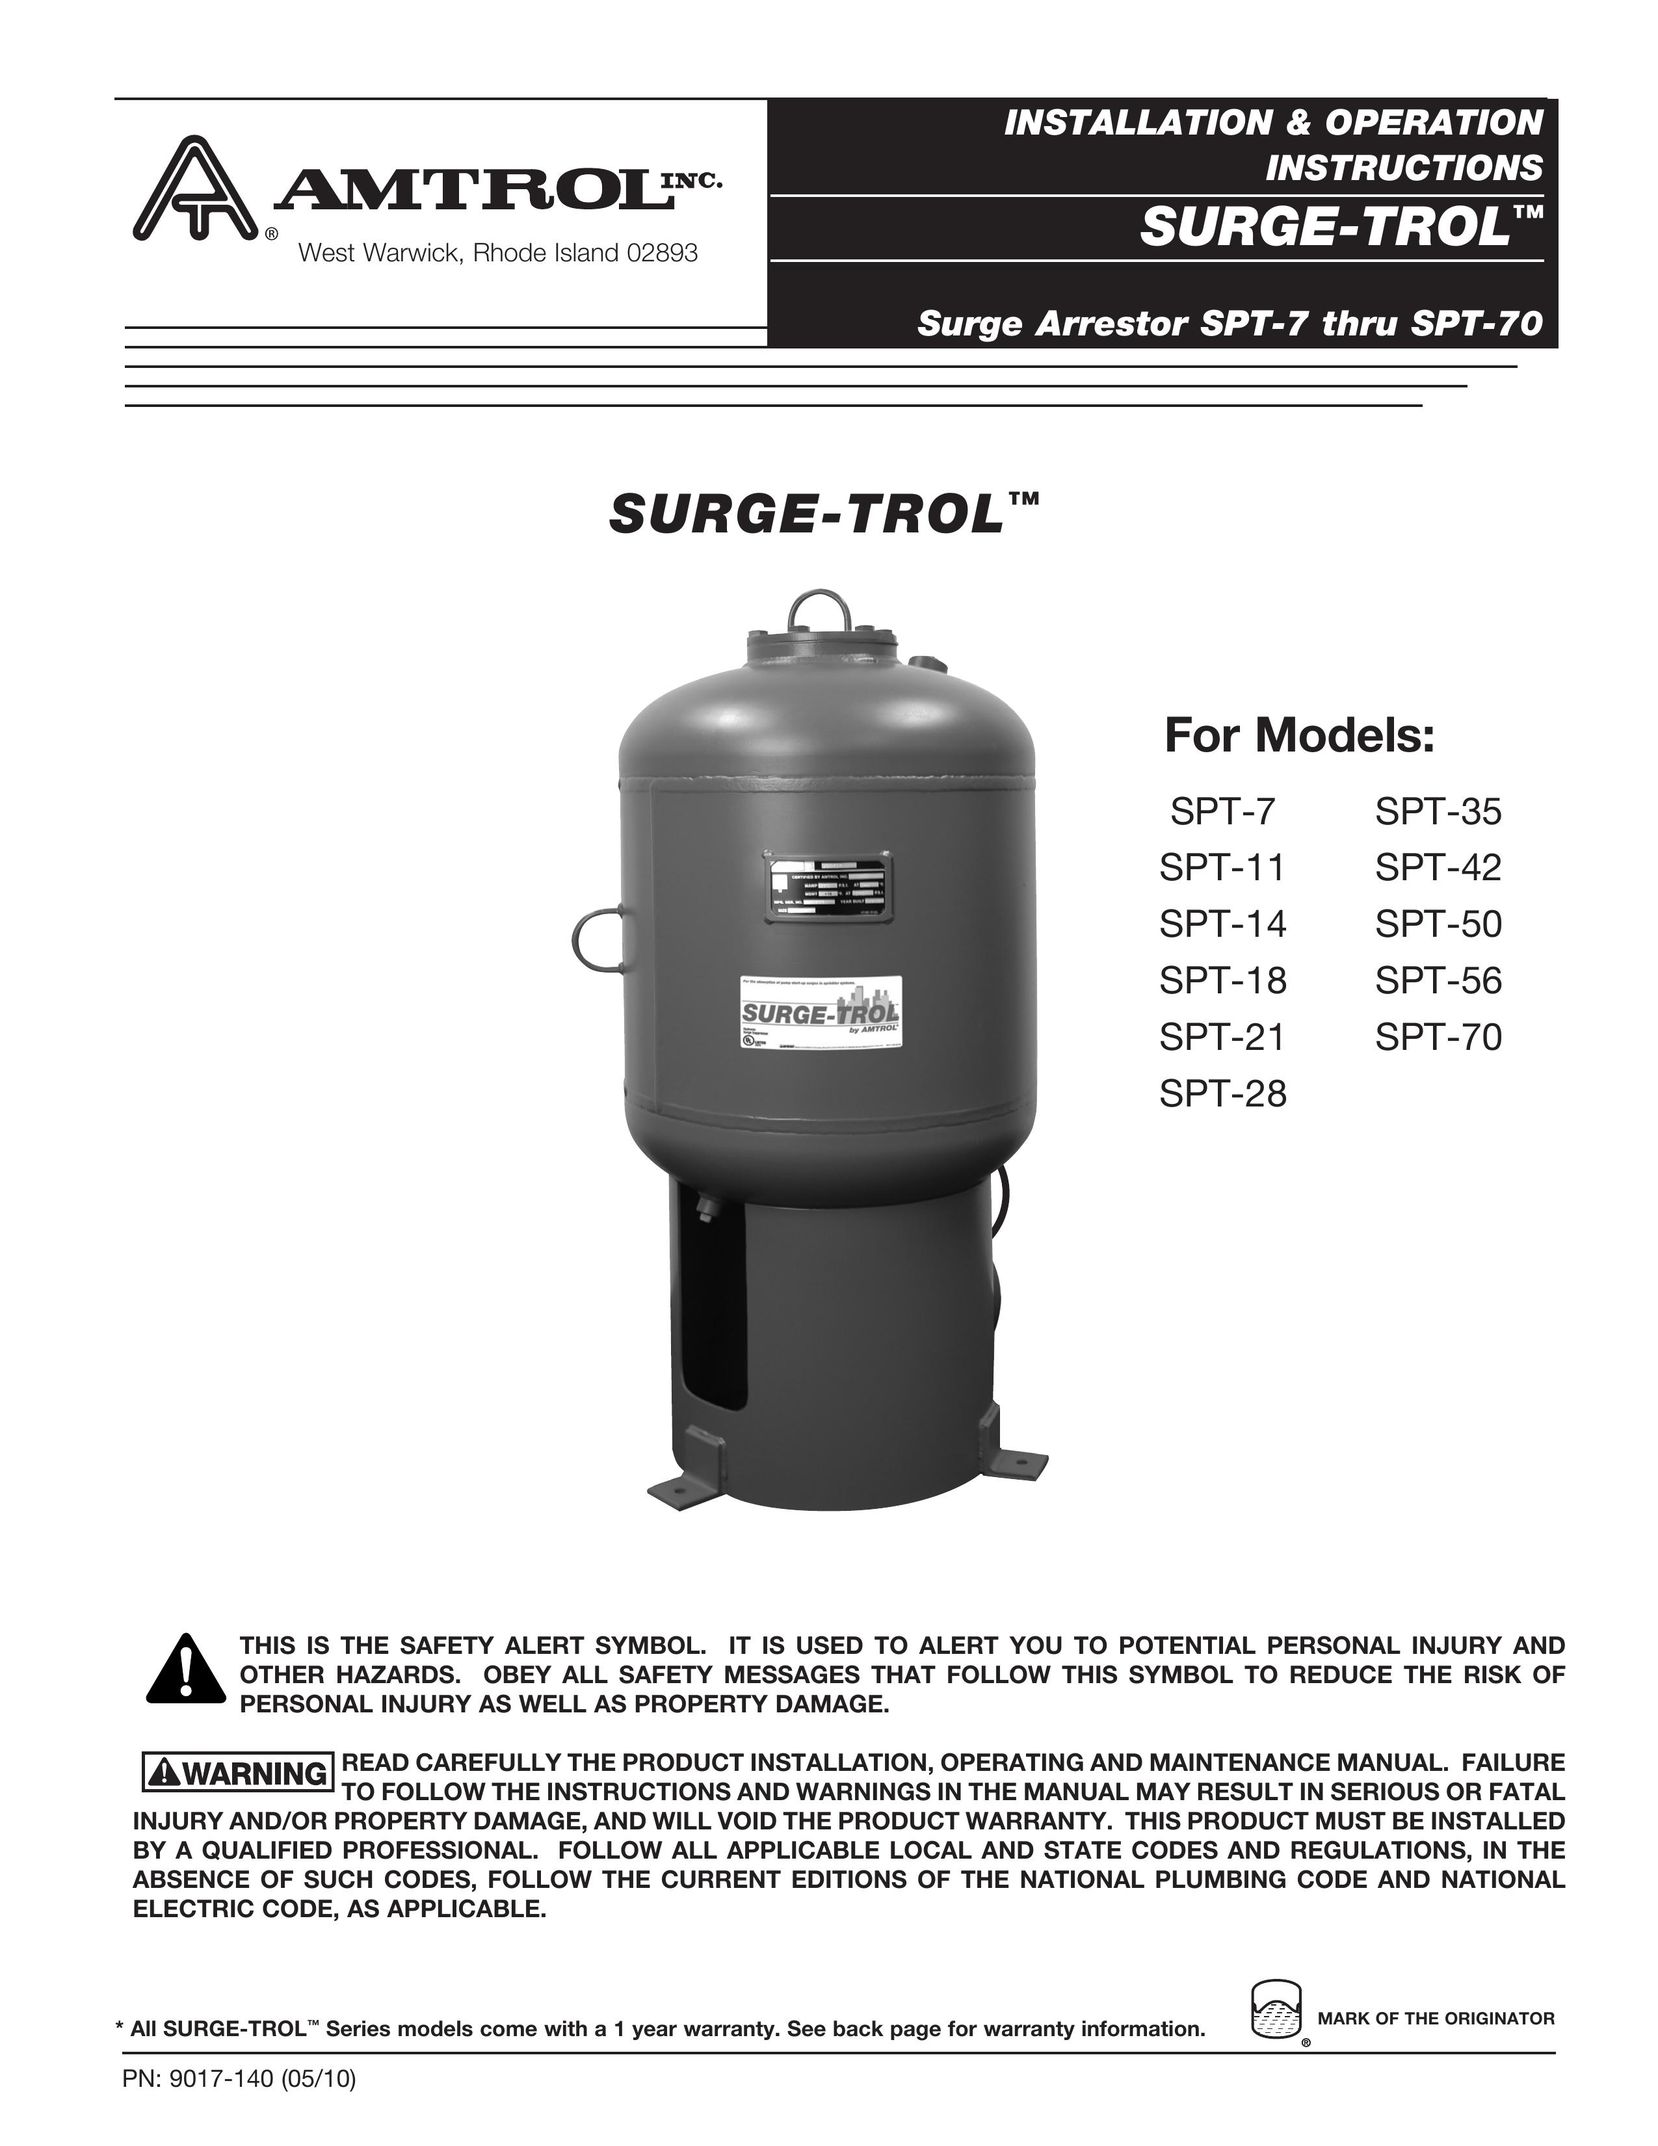 Amtrol SPT-14 Surge Protector User Manual